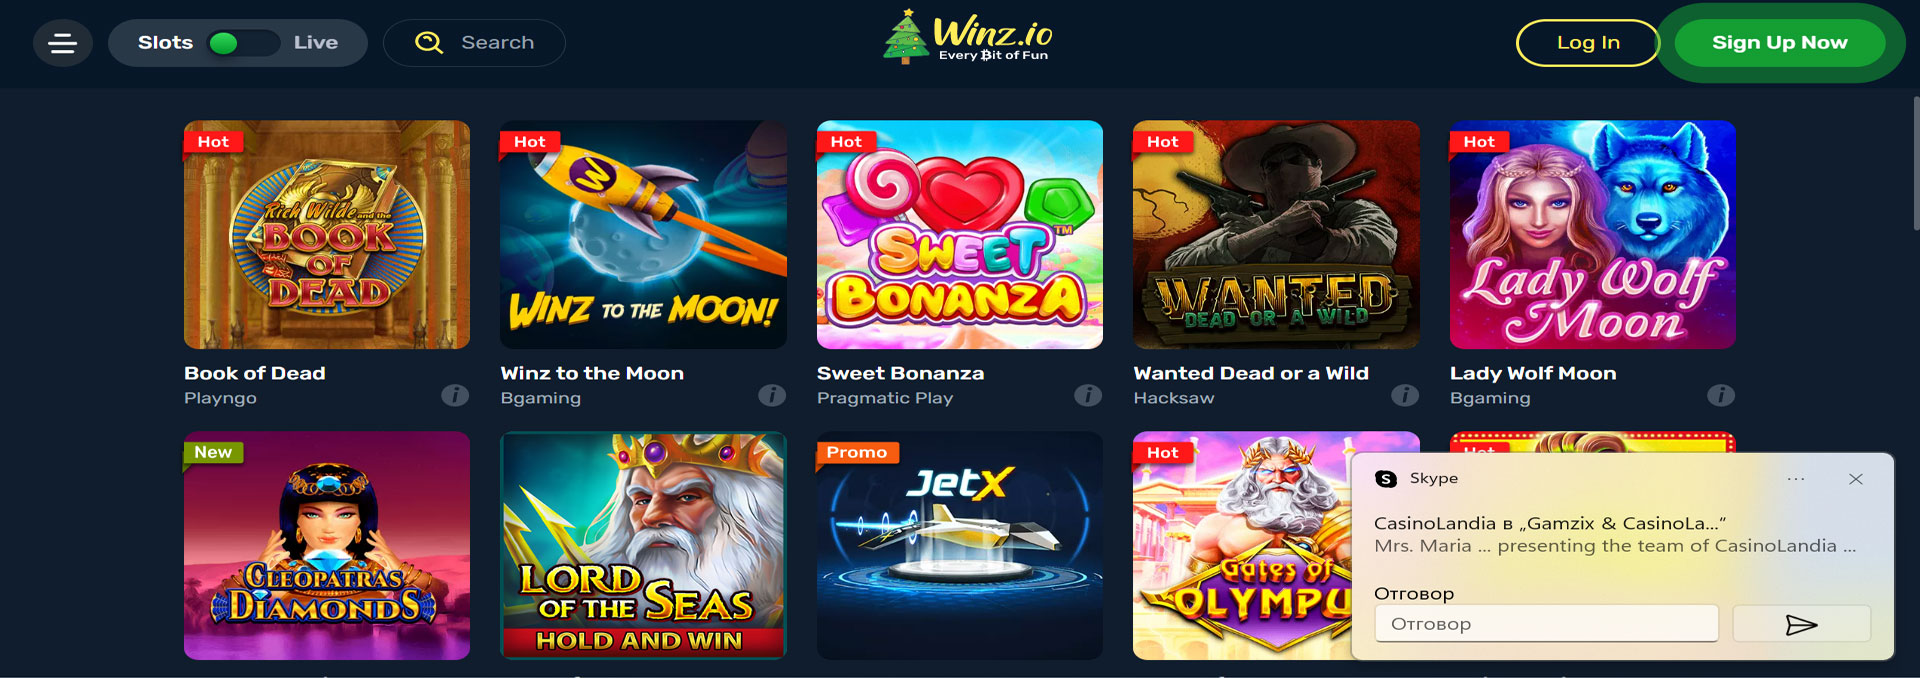 Winz.io Casino Slots